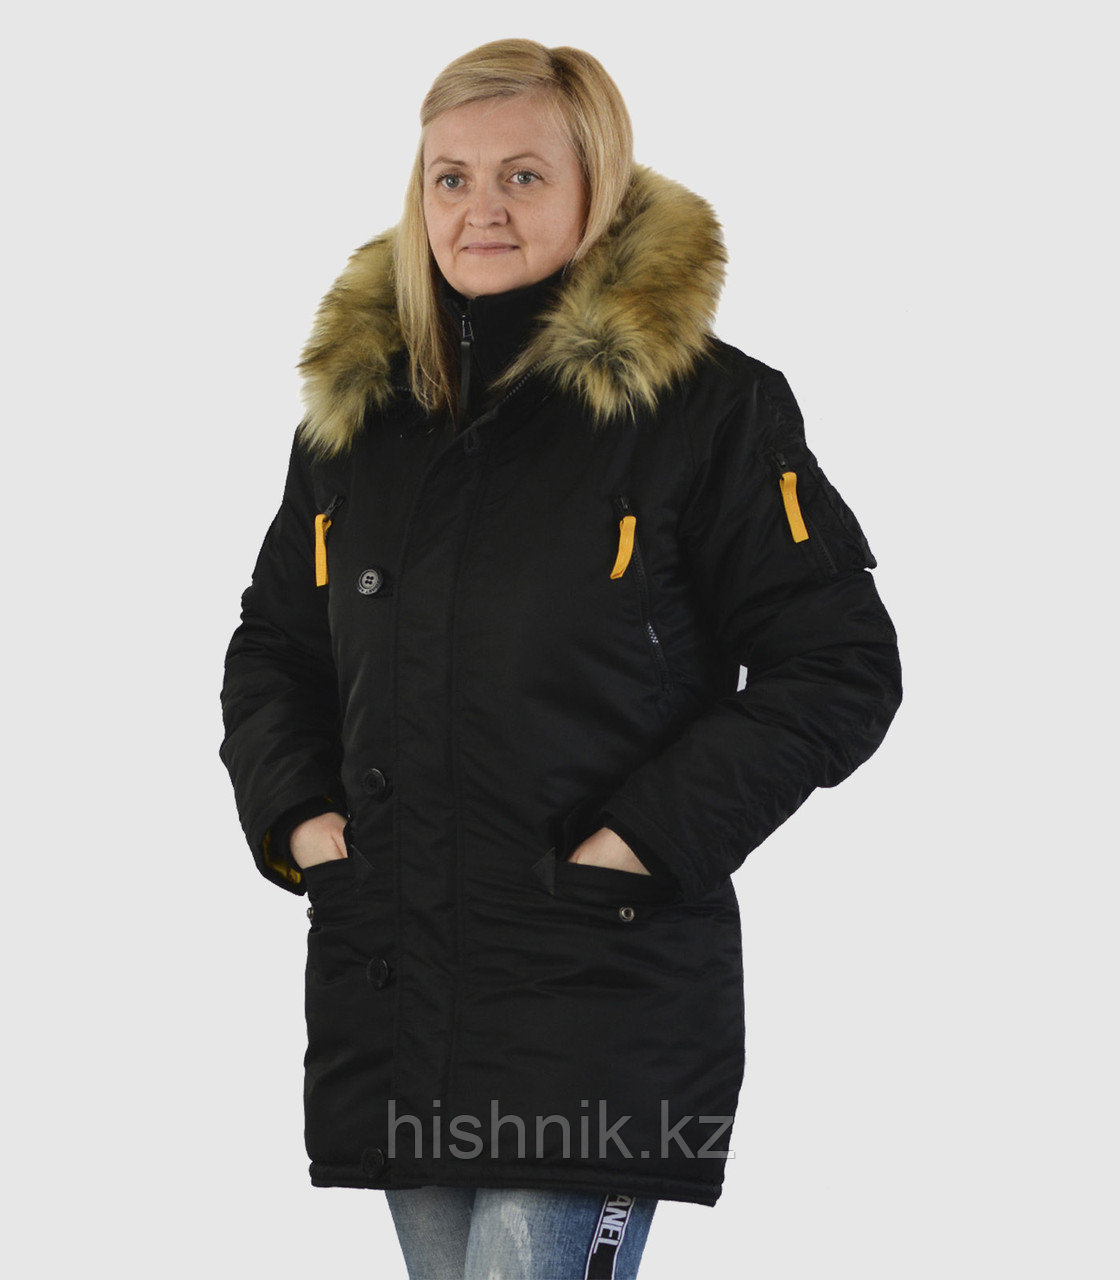 Куртка женская HUSKY WOMAN’S BLACK/YELLOW, фото 1